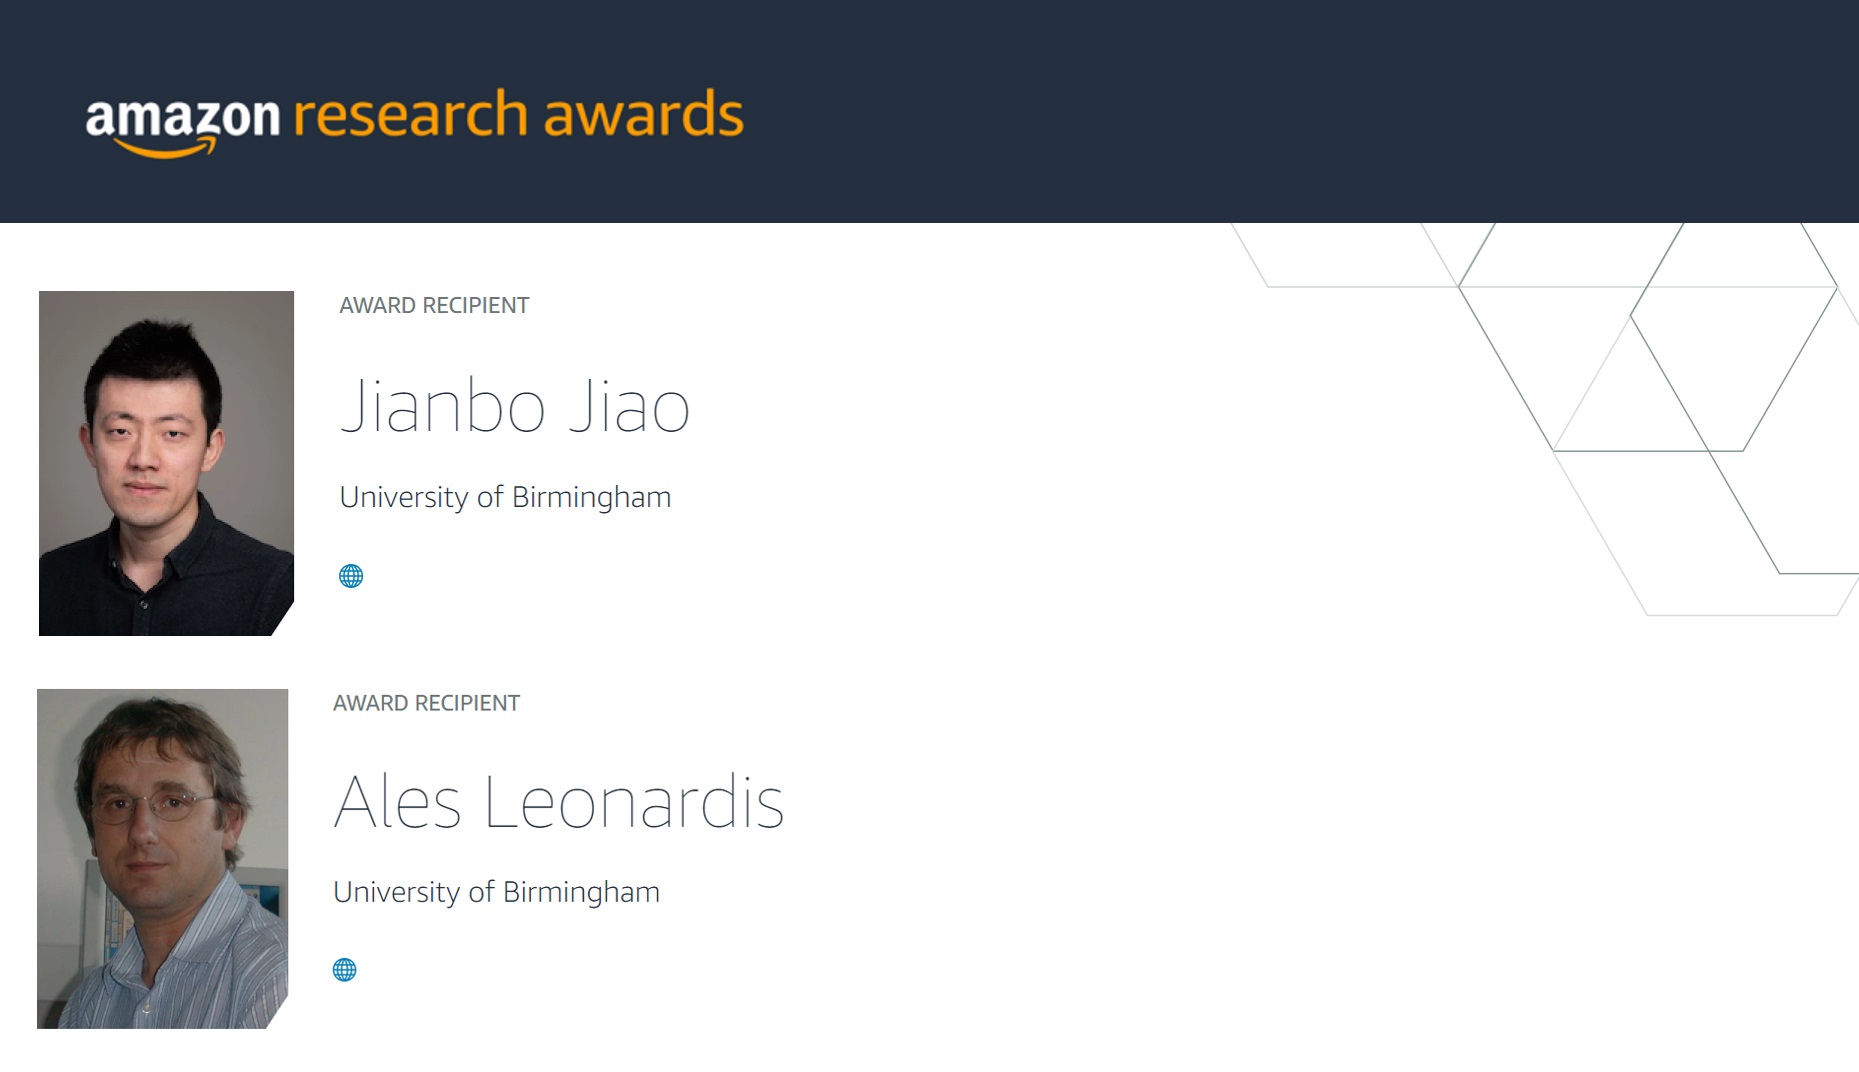 Amazon Research Award Recipients